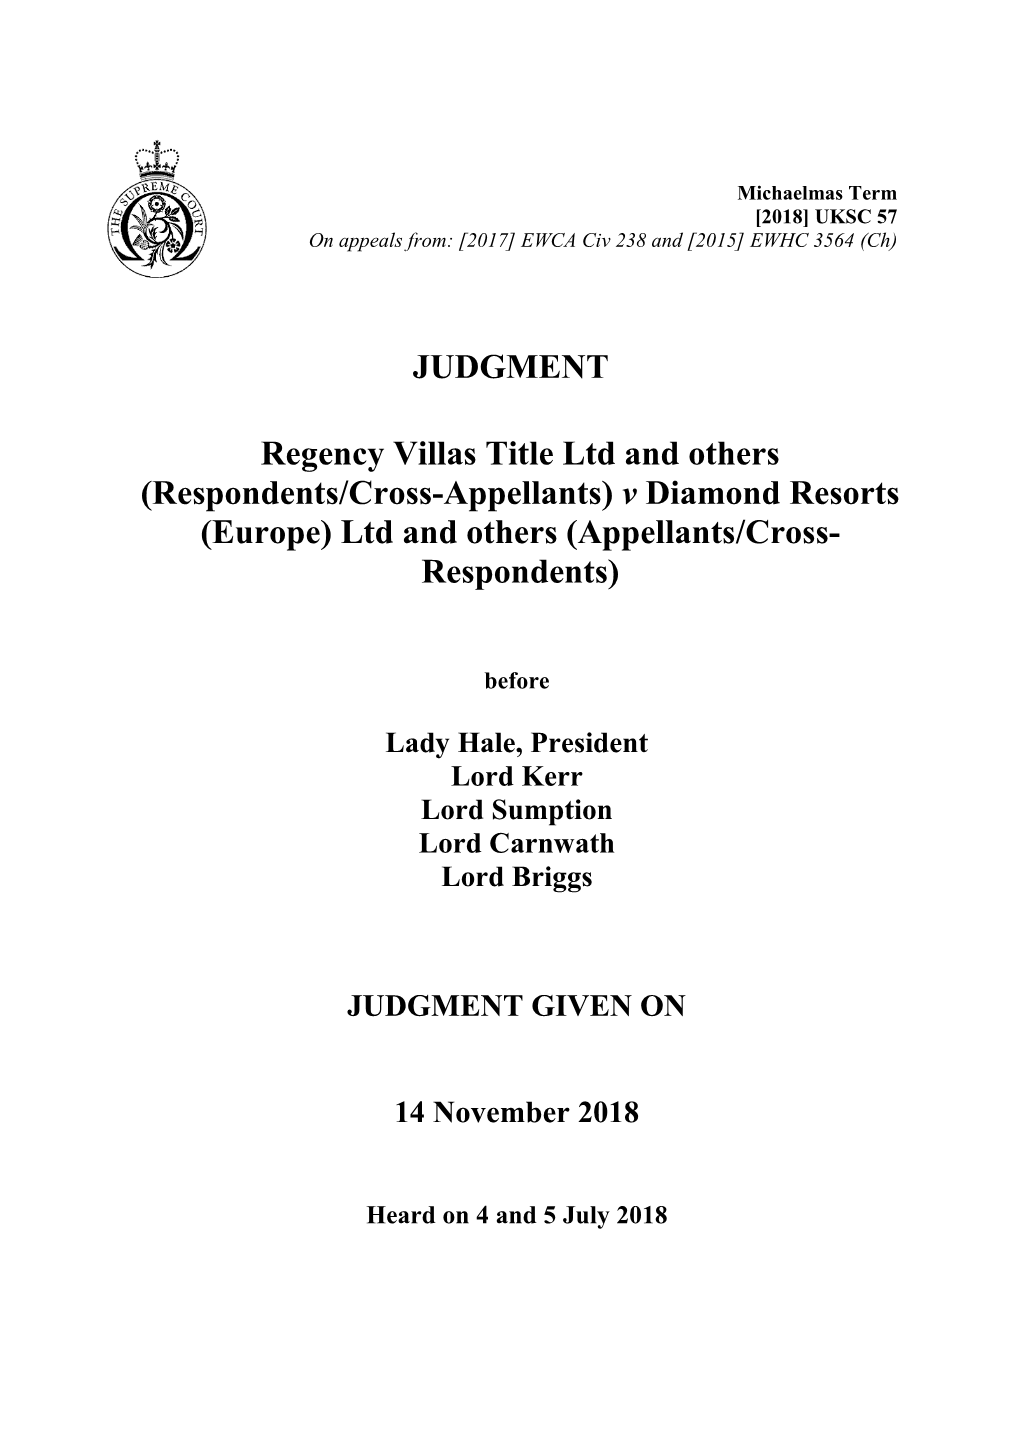 JUDGMENT Regency Villas Title Ltd and Others (Respondents/Cross-Appellants)